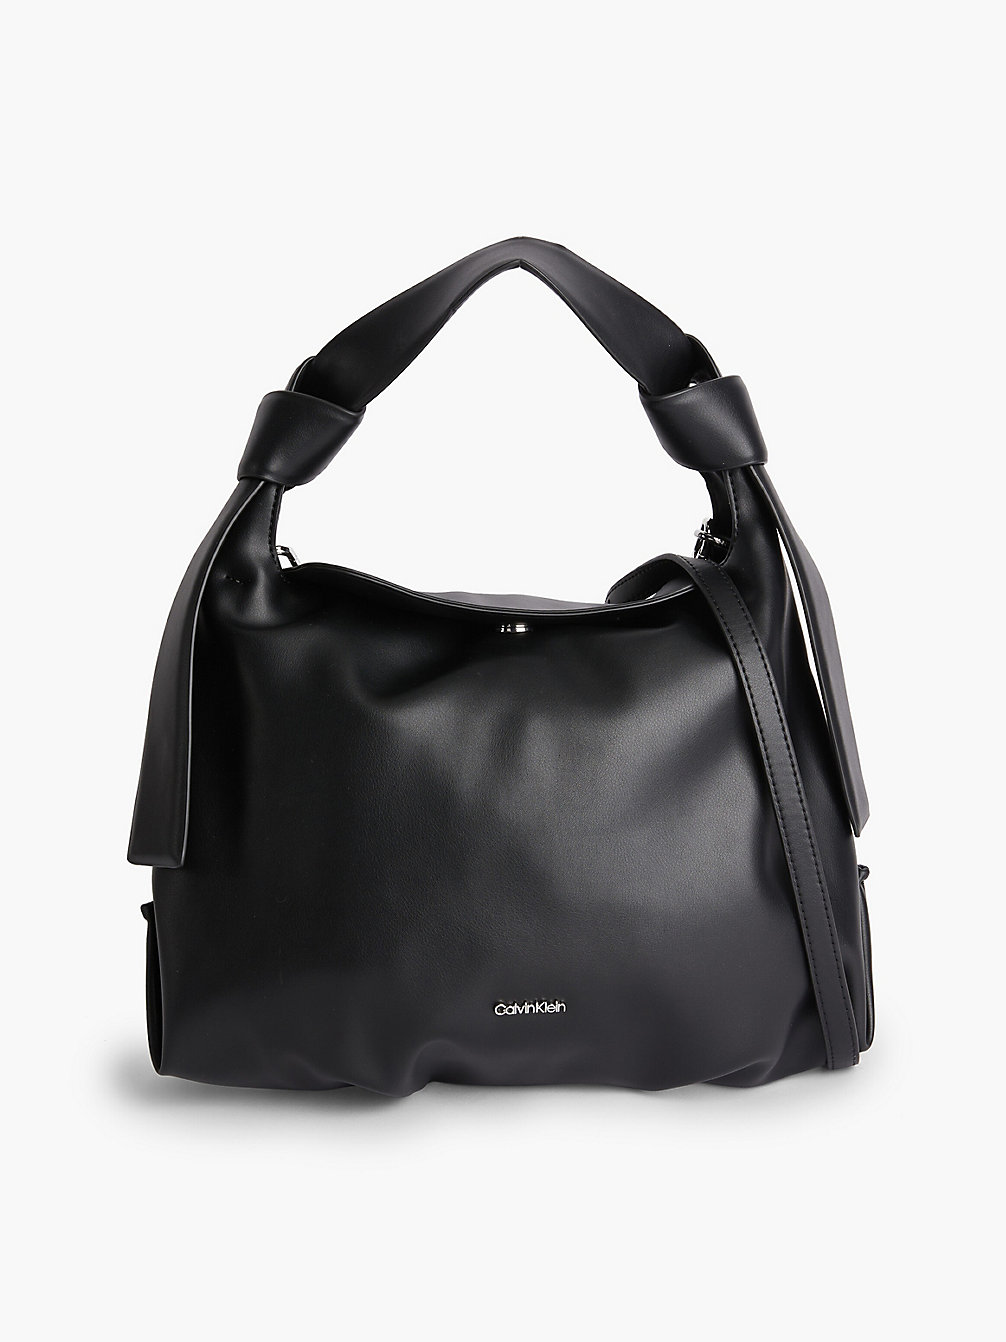 CK BLACK Recycled Crossbody Bag undefined women Calvin Klein